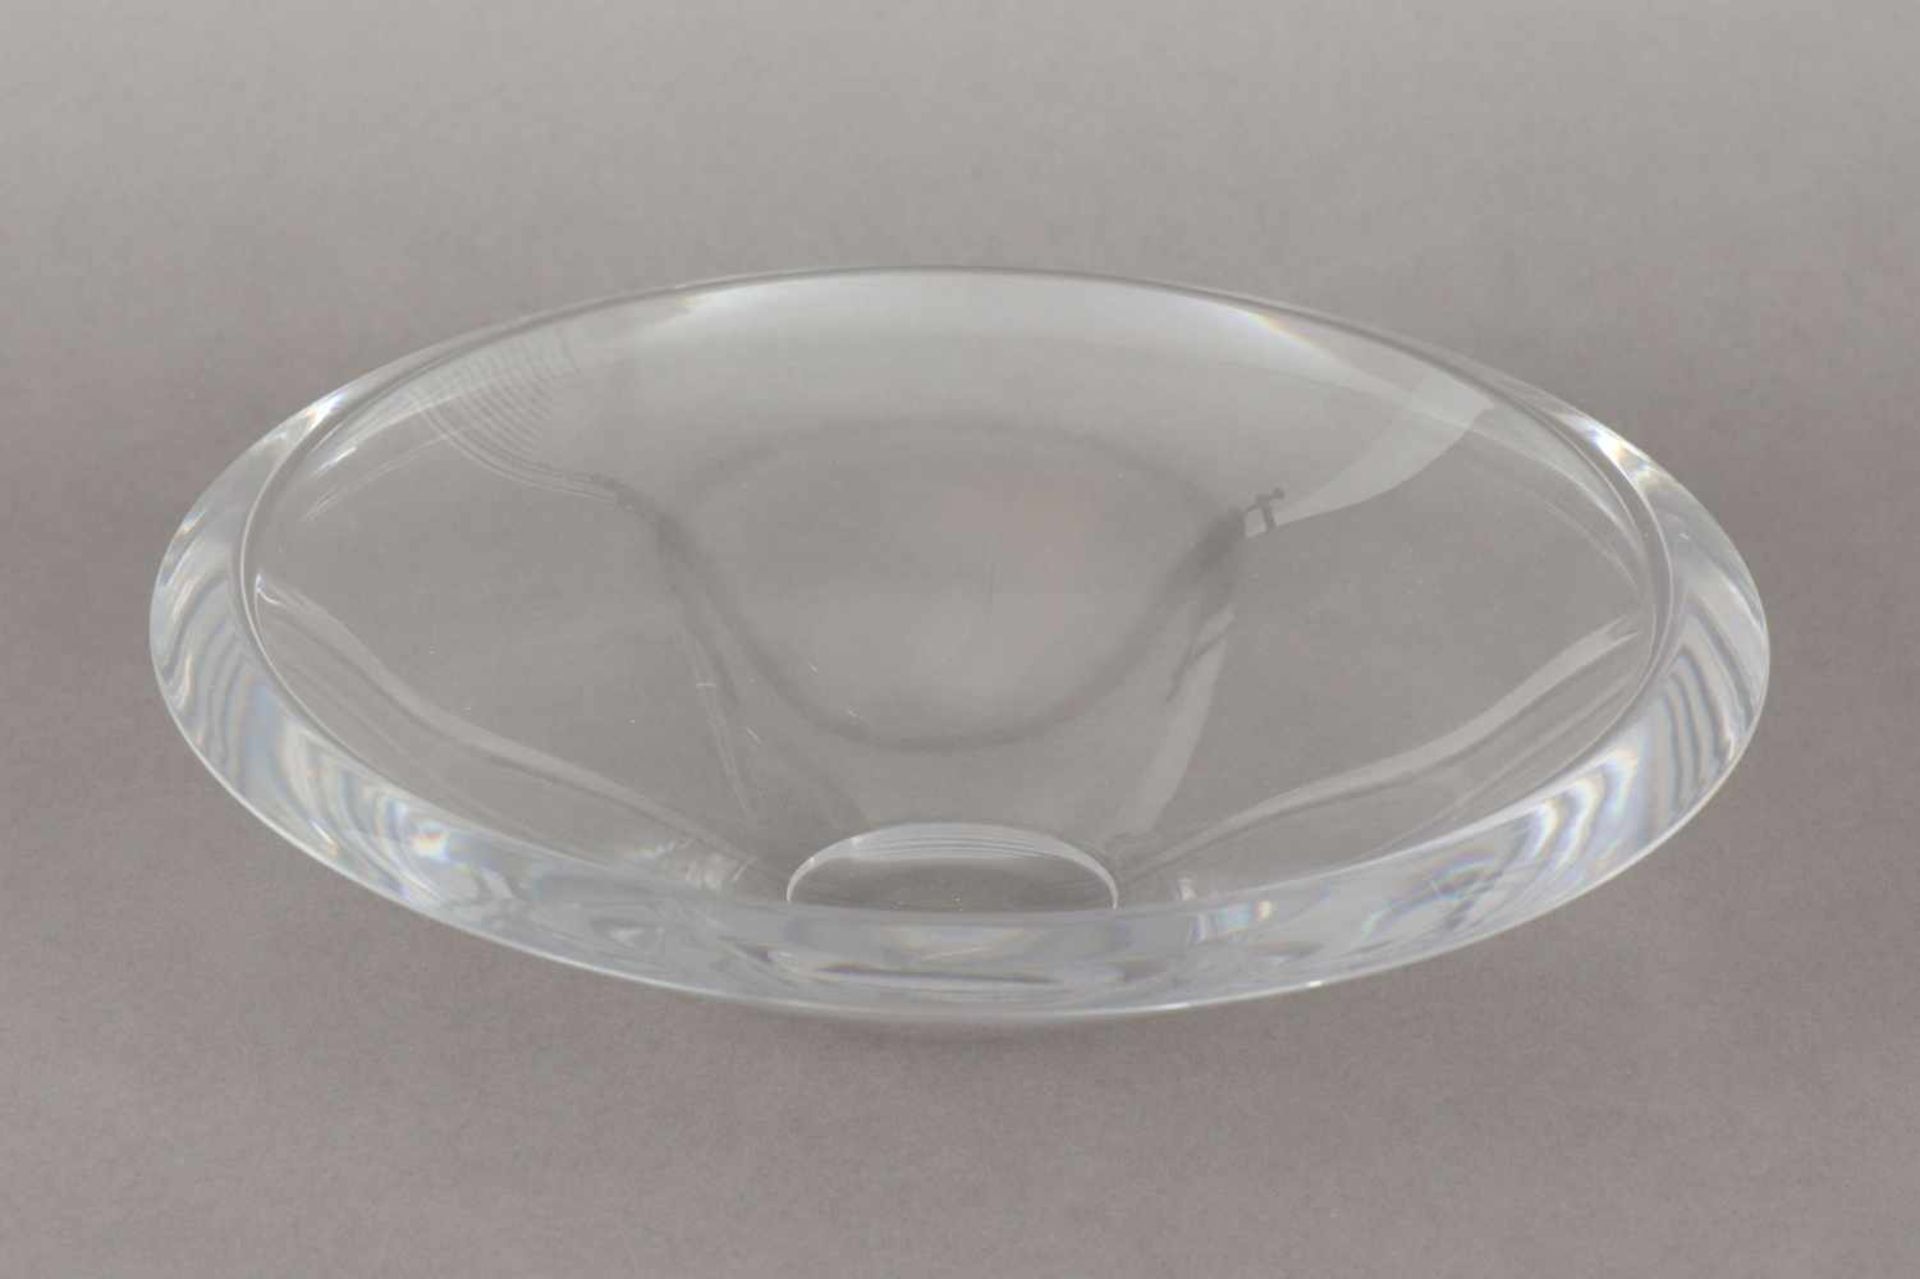 ORREFORS Kristallschale farbloses Glas, runde, vertiefte Schale, dickwandig, D ca. 30cm